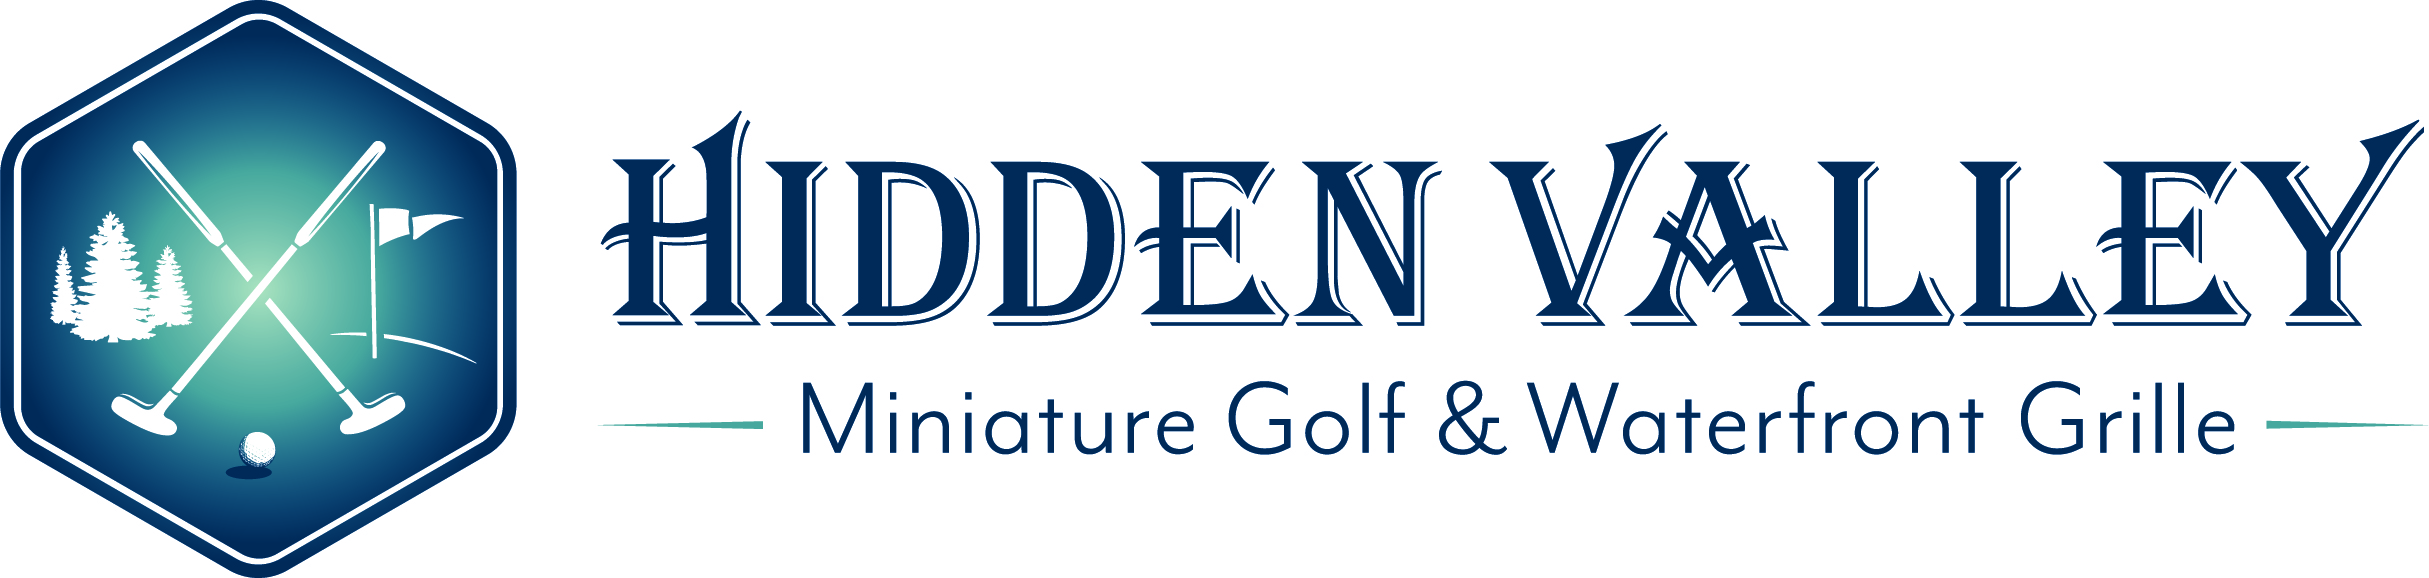 Hidden Valley Miniature Golf & Waterfront Grille